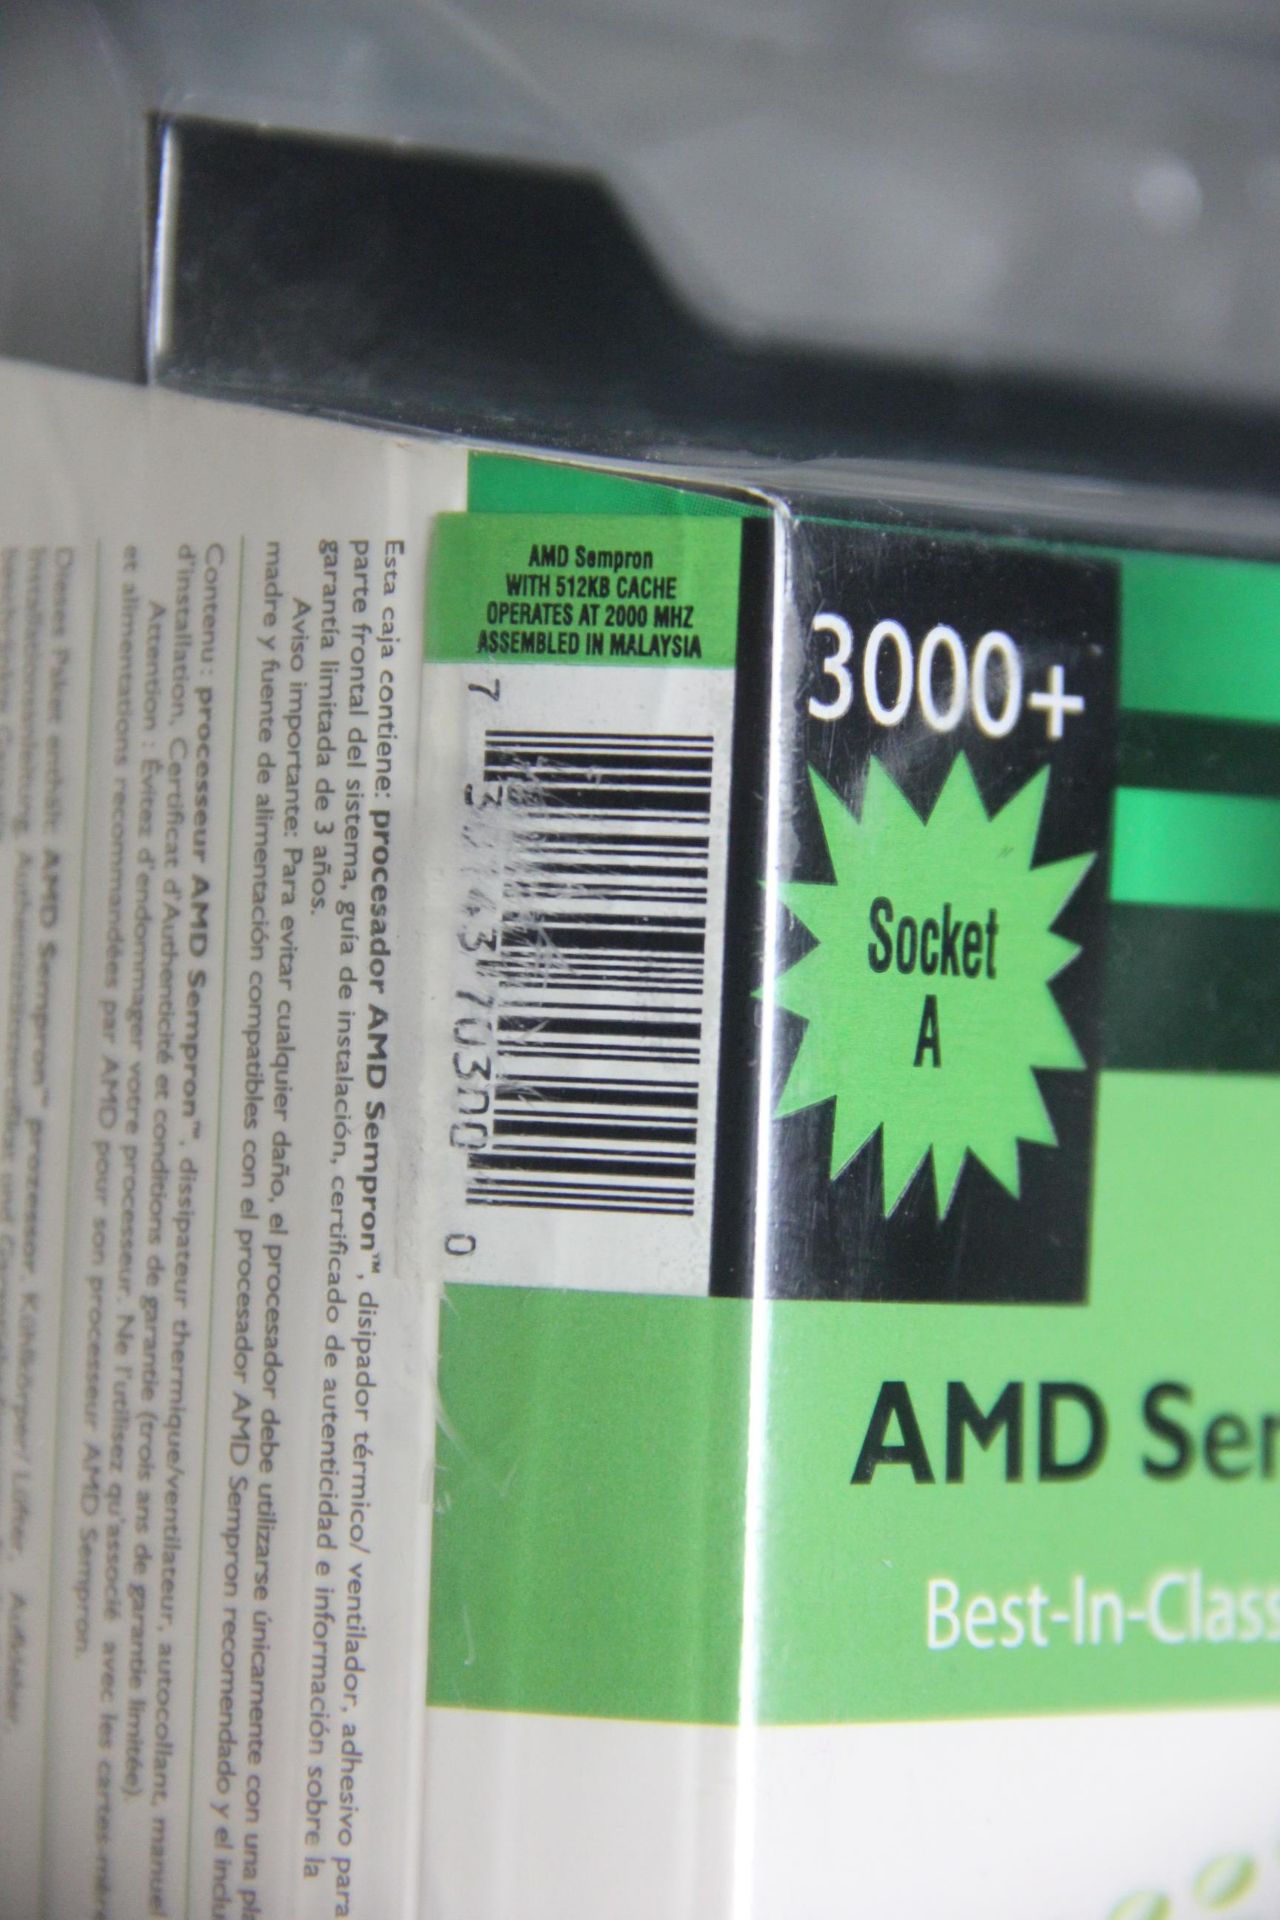 NEW AMD SEMPRON 3000+ SOCKET A PROCESSOR - Image 5 of 5